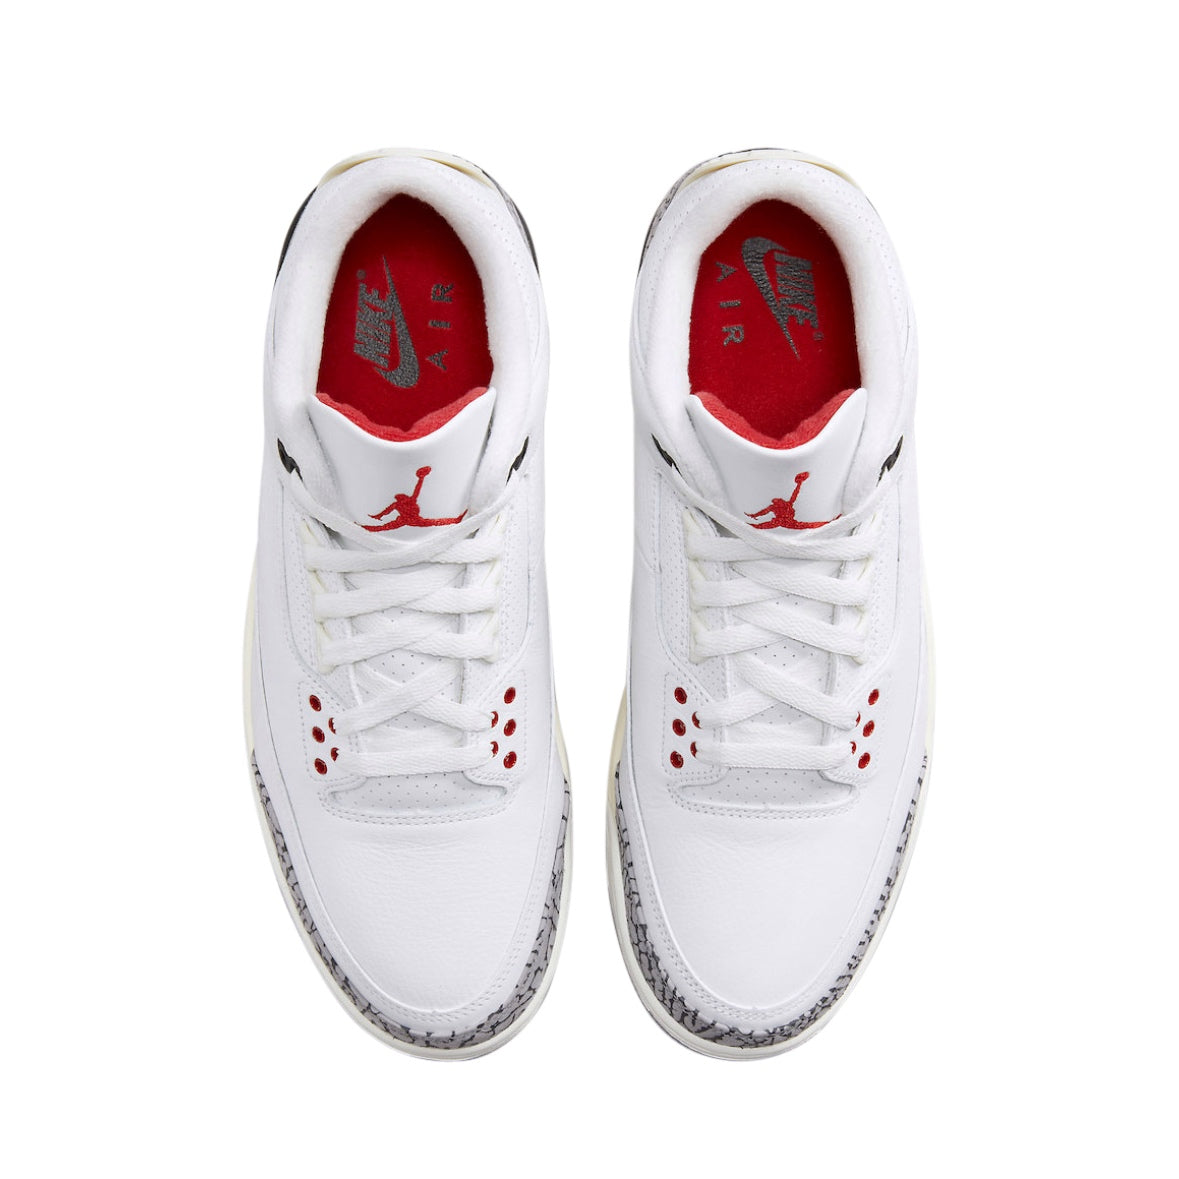 Jordan 3 “White Cement Reimagined”